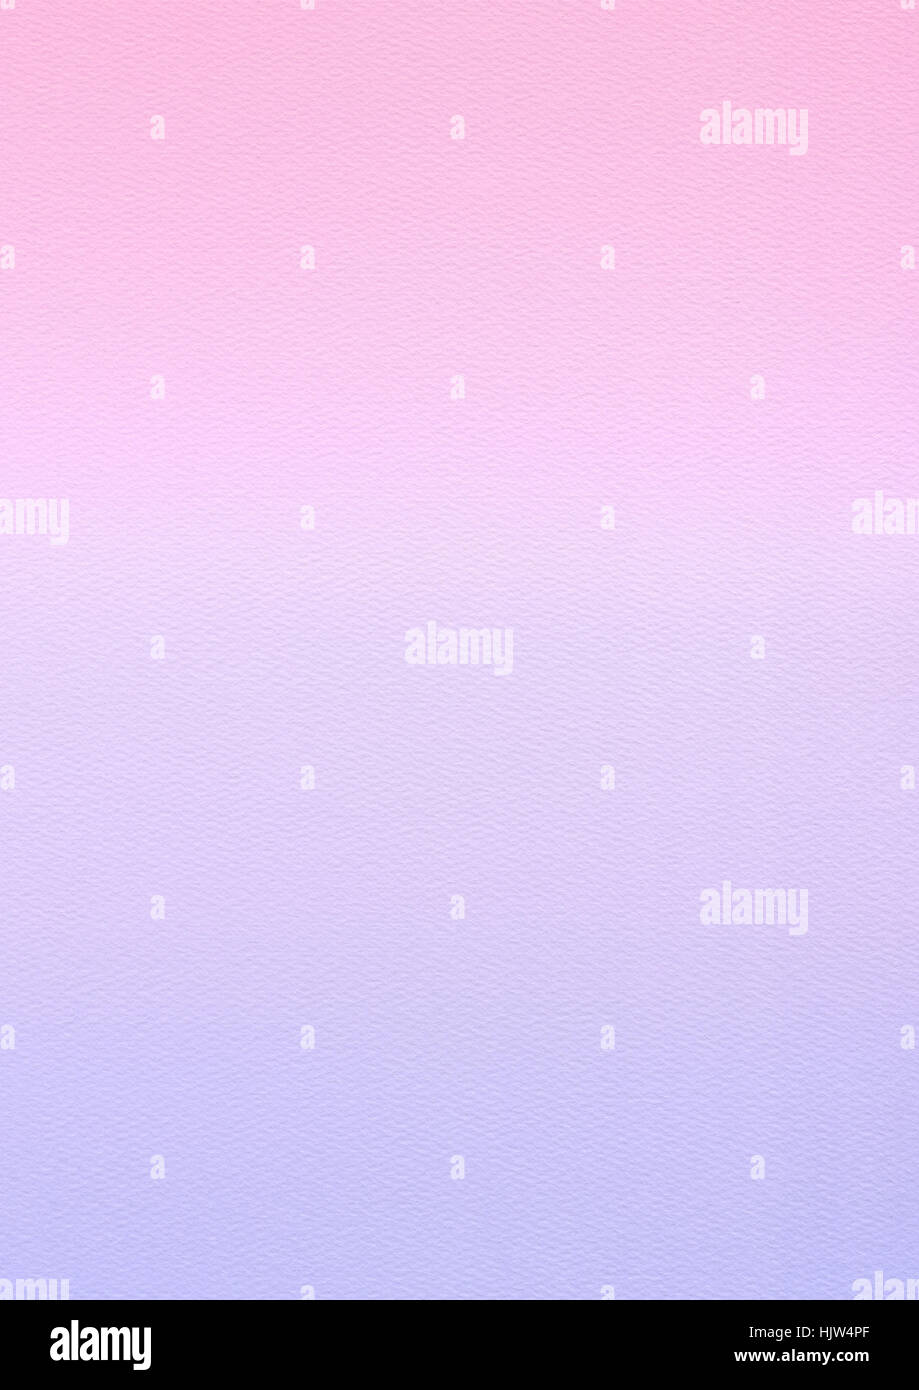 Vertical gradient pink to blue textured textured paper backbround Stock Photo